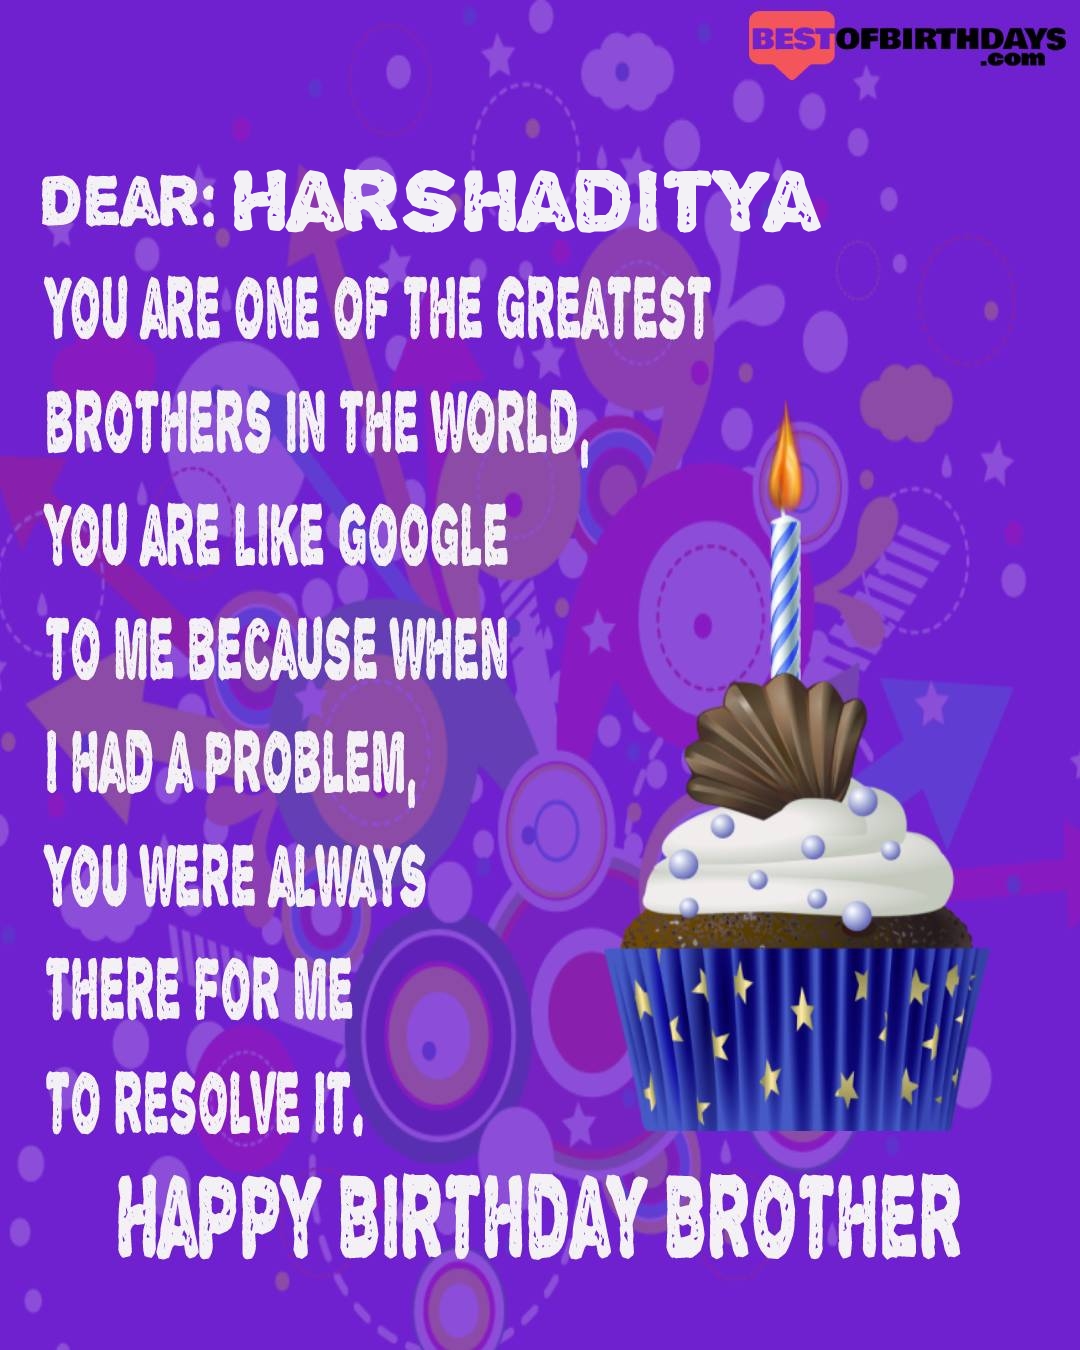 Happy birthday harshaditya bhai brother bro